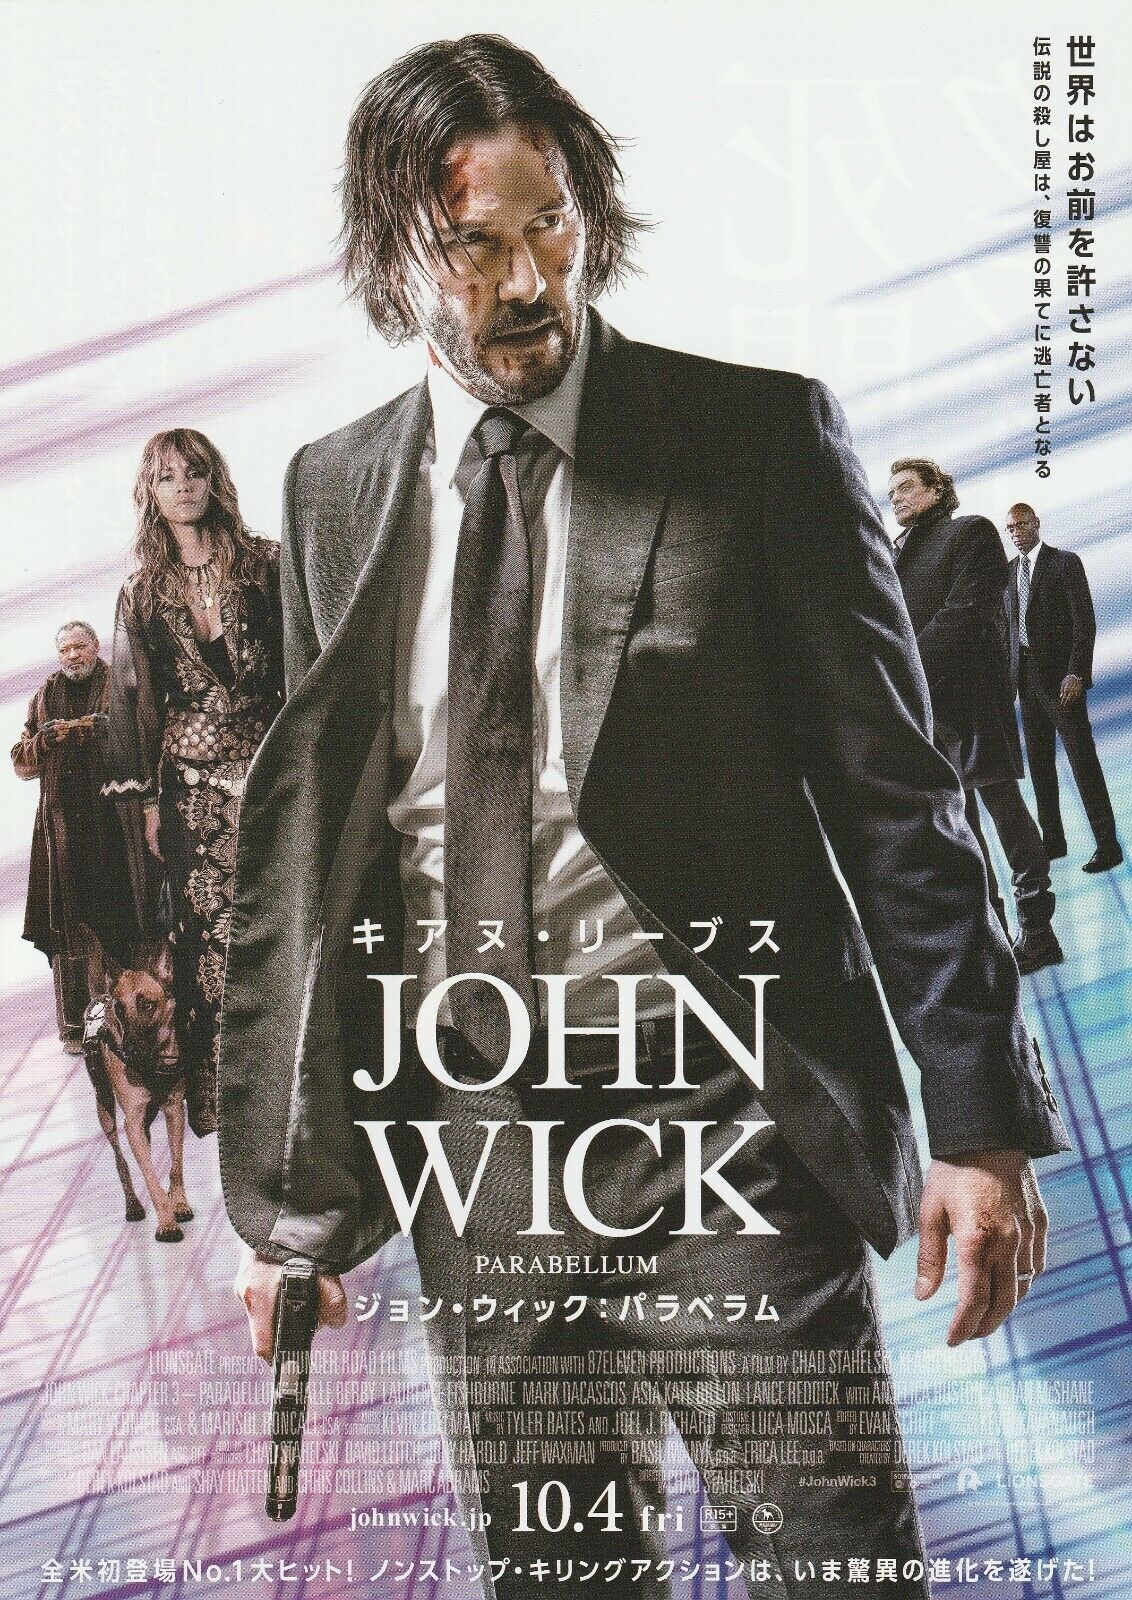 John Wick 2019 Movie Wallpapers